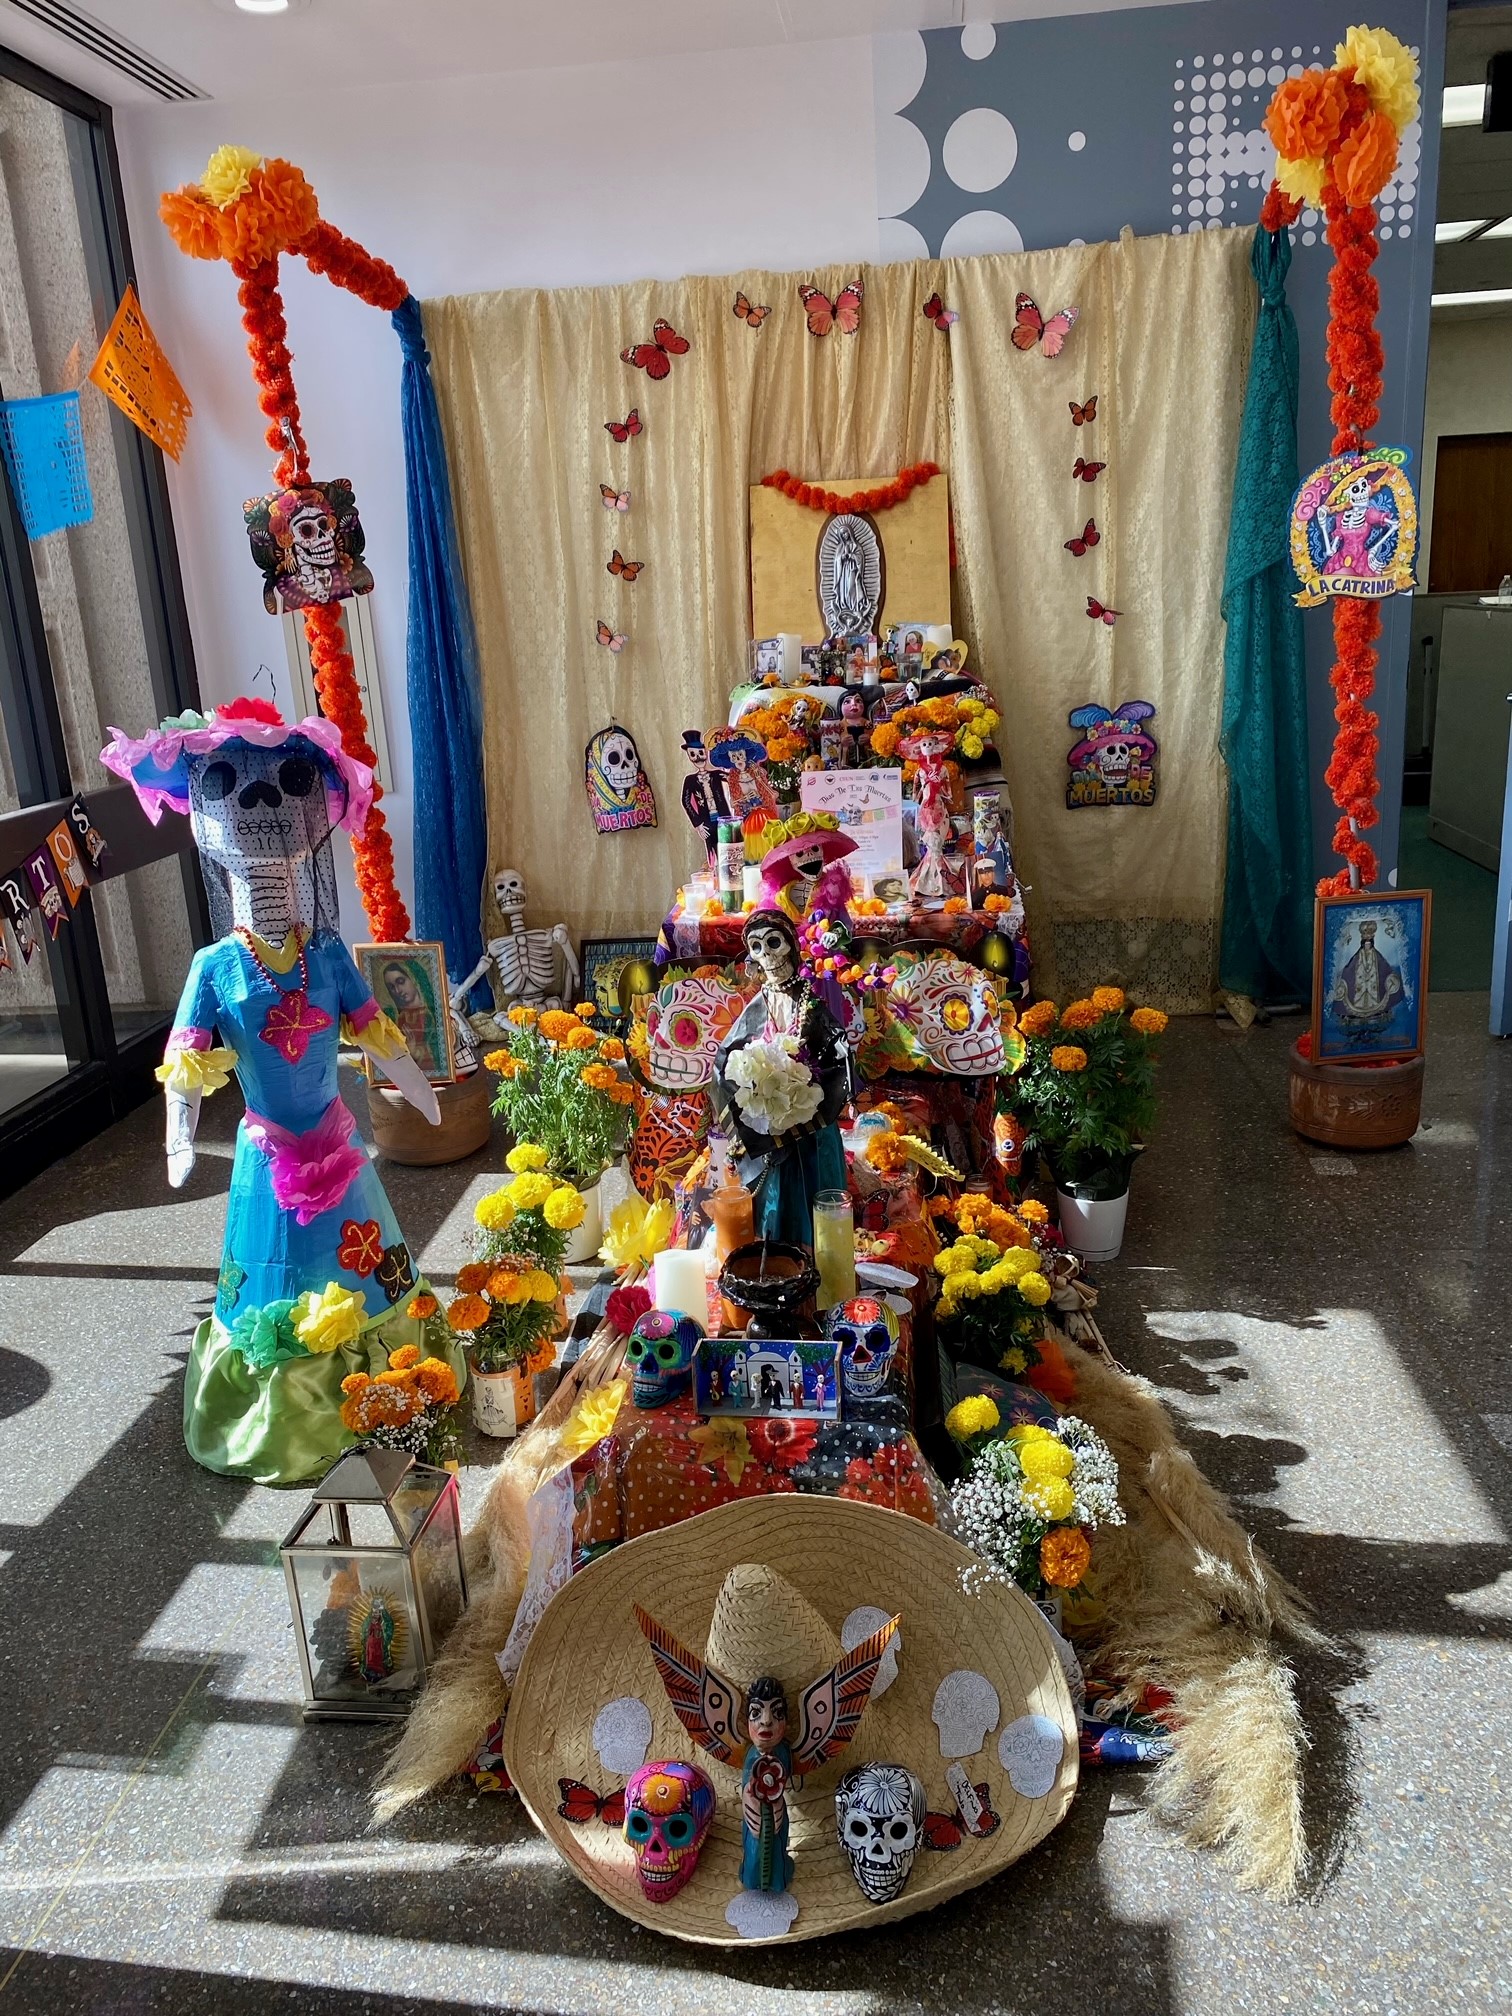 A colorful dia de los muertos altar, framed by orange marigolds, a paper mache Catrina figure, and monarch butterflies